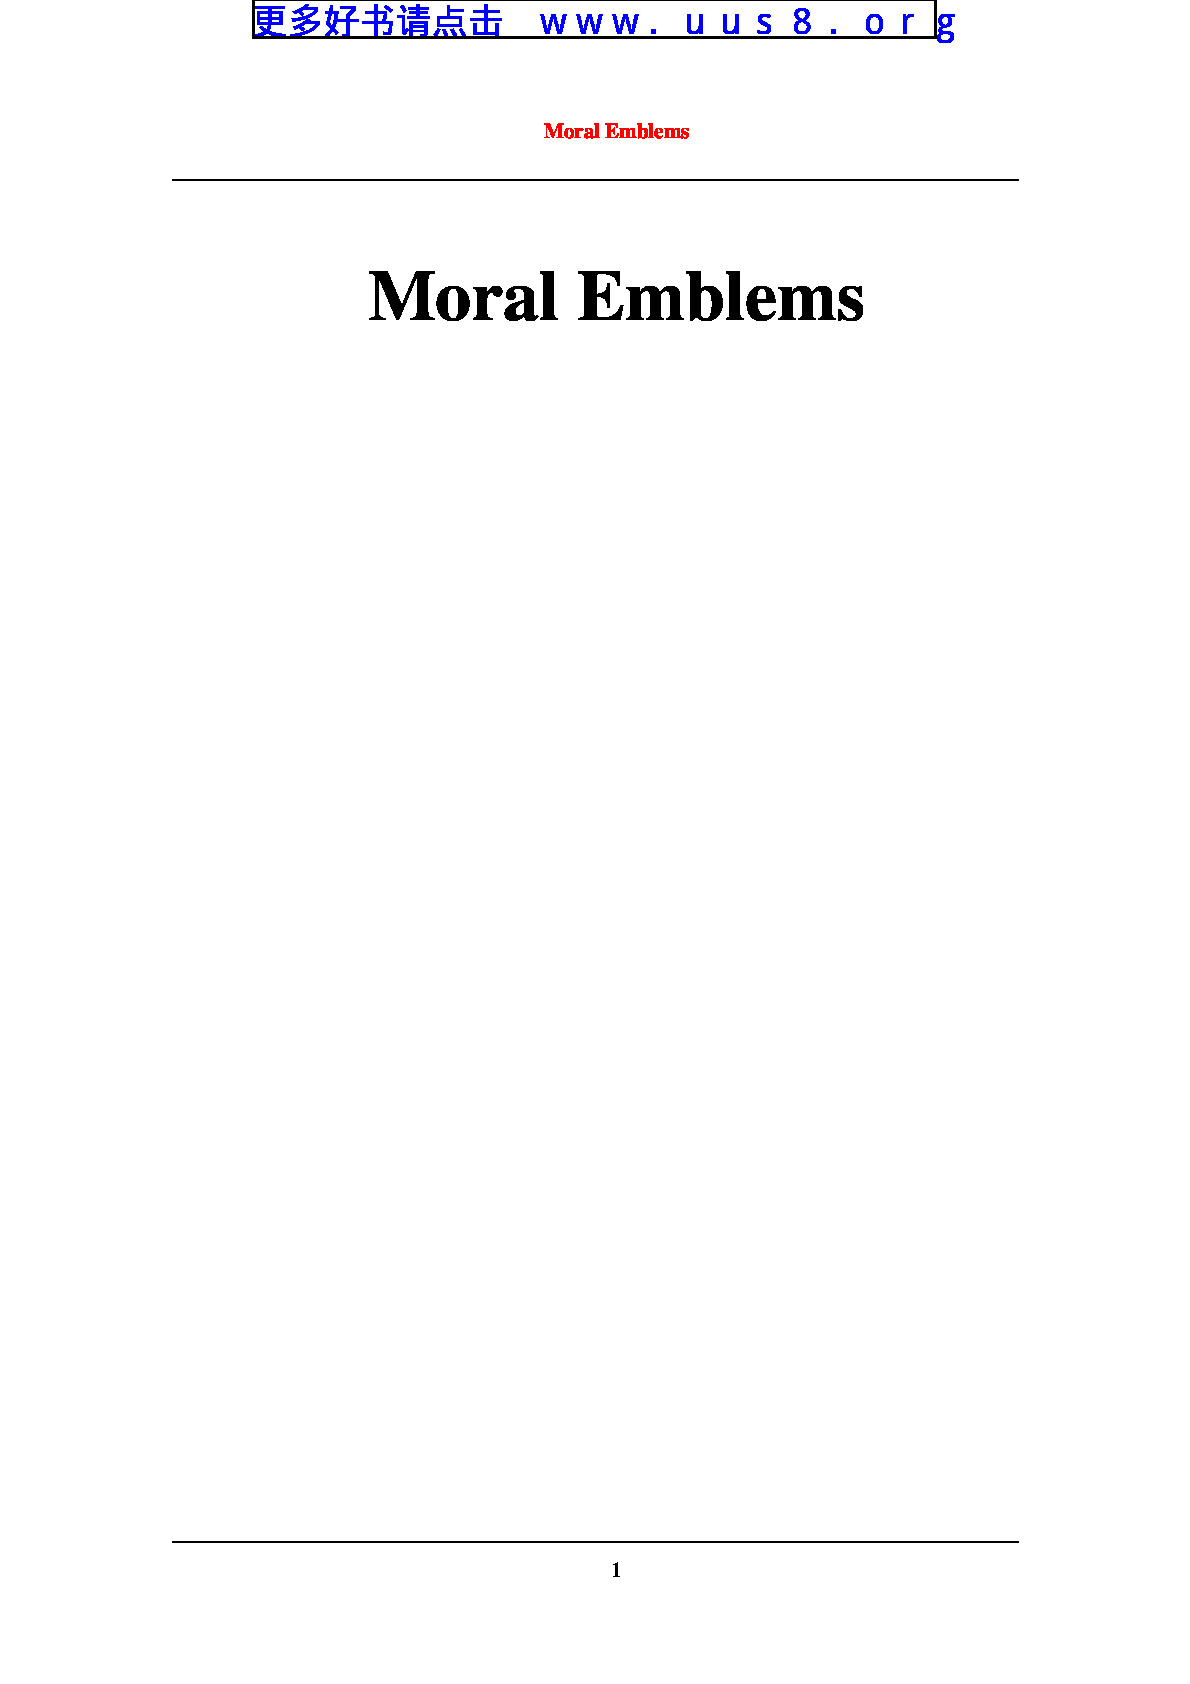 Moral_Emblems(道德标志)